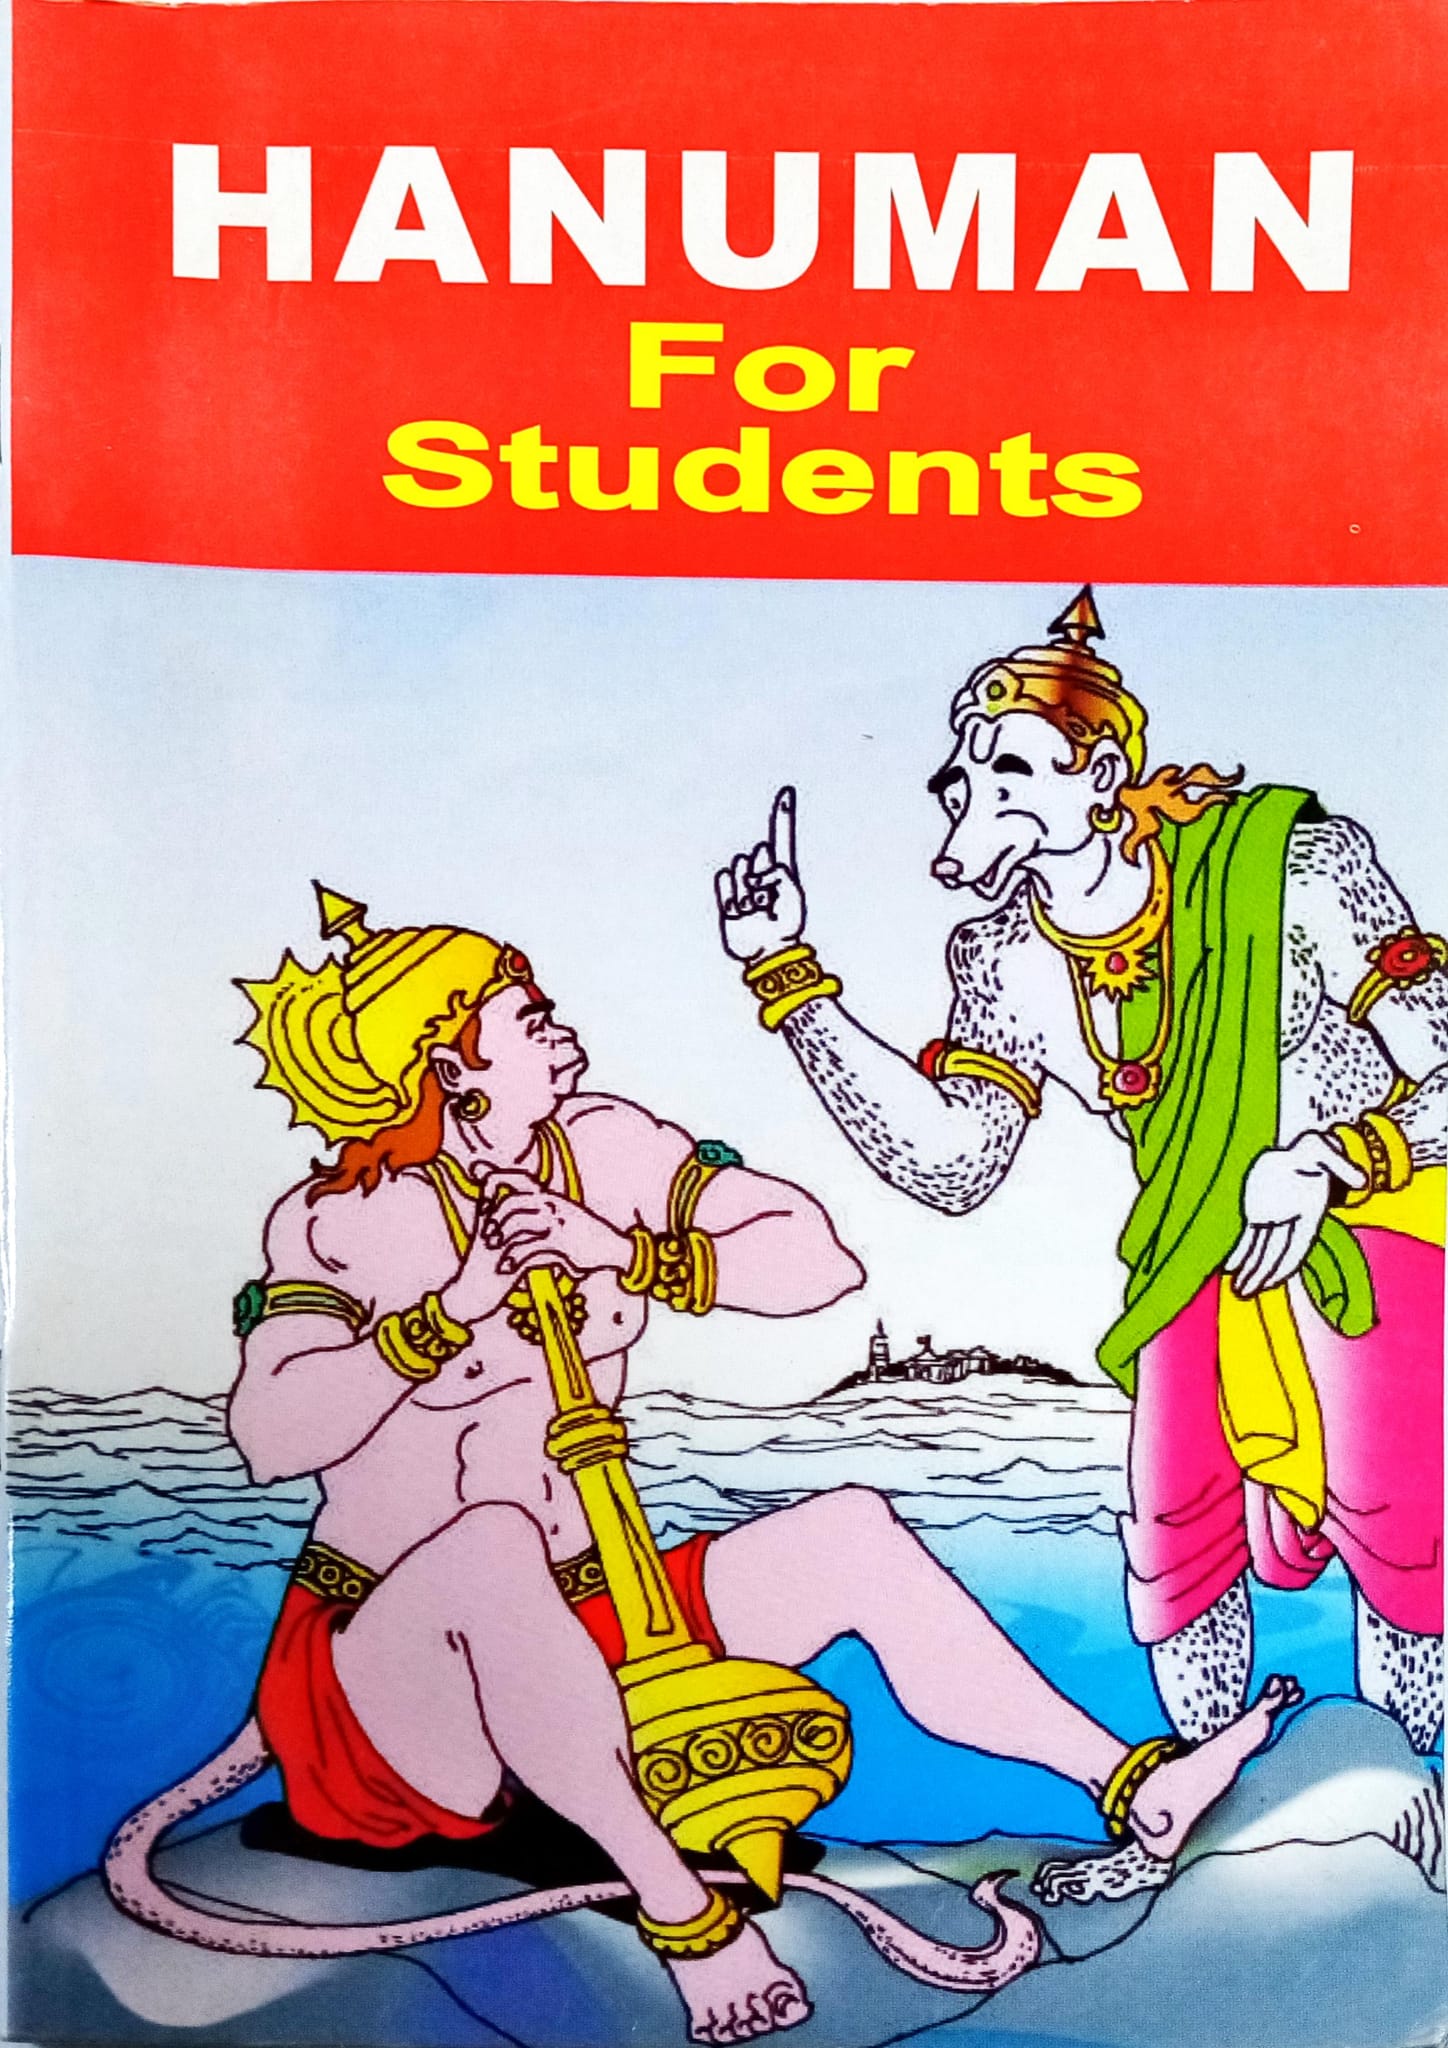 Hanuman for Students